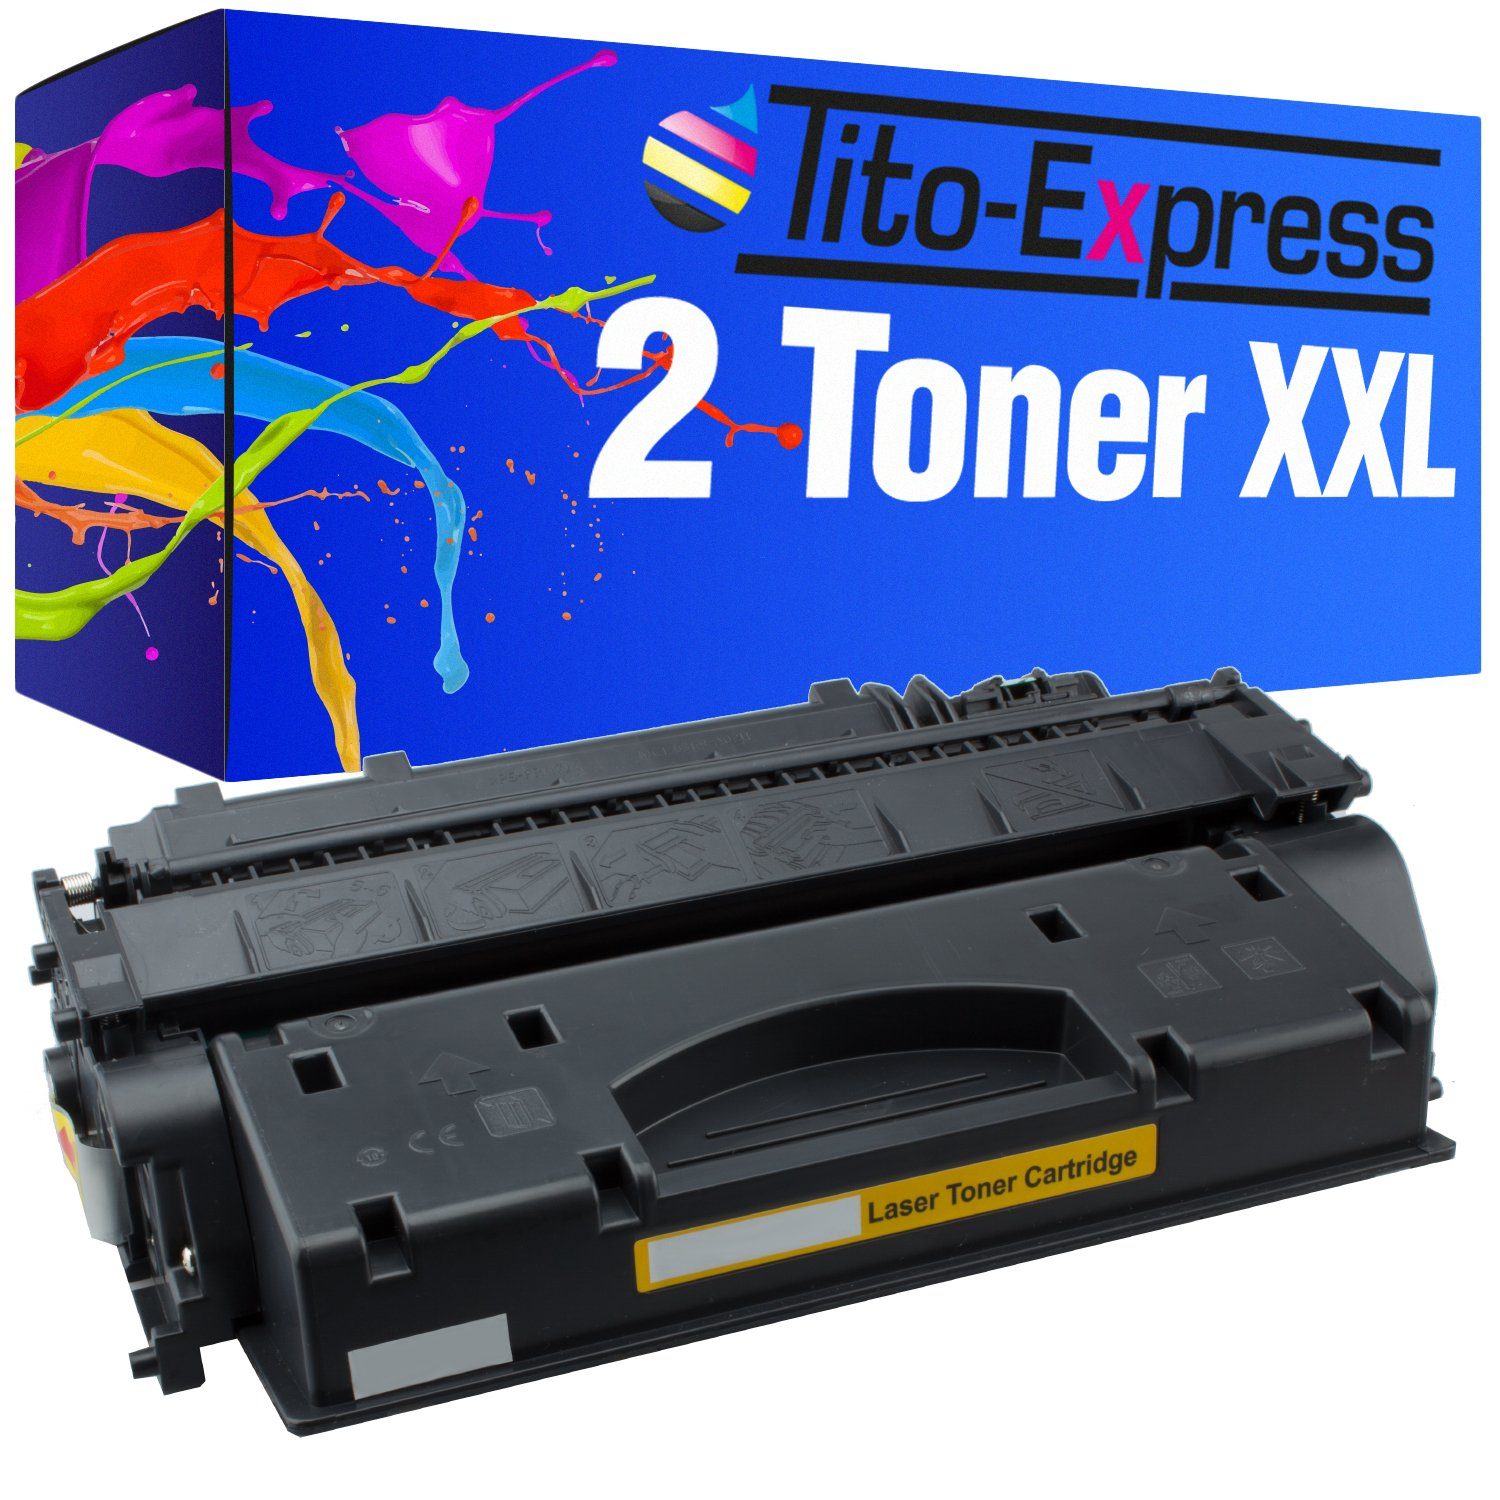 Tito-Express Tonerpatrone 2er Set ersetzt HP CF 280 X HP CF 280X HPCF280X HP 80X, (Doppelpack, 2x Black), für Laserjet Pro 400 M401dn M401dw MFP M425dn M425dw